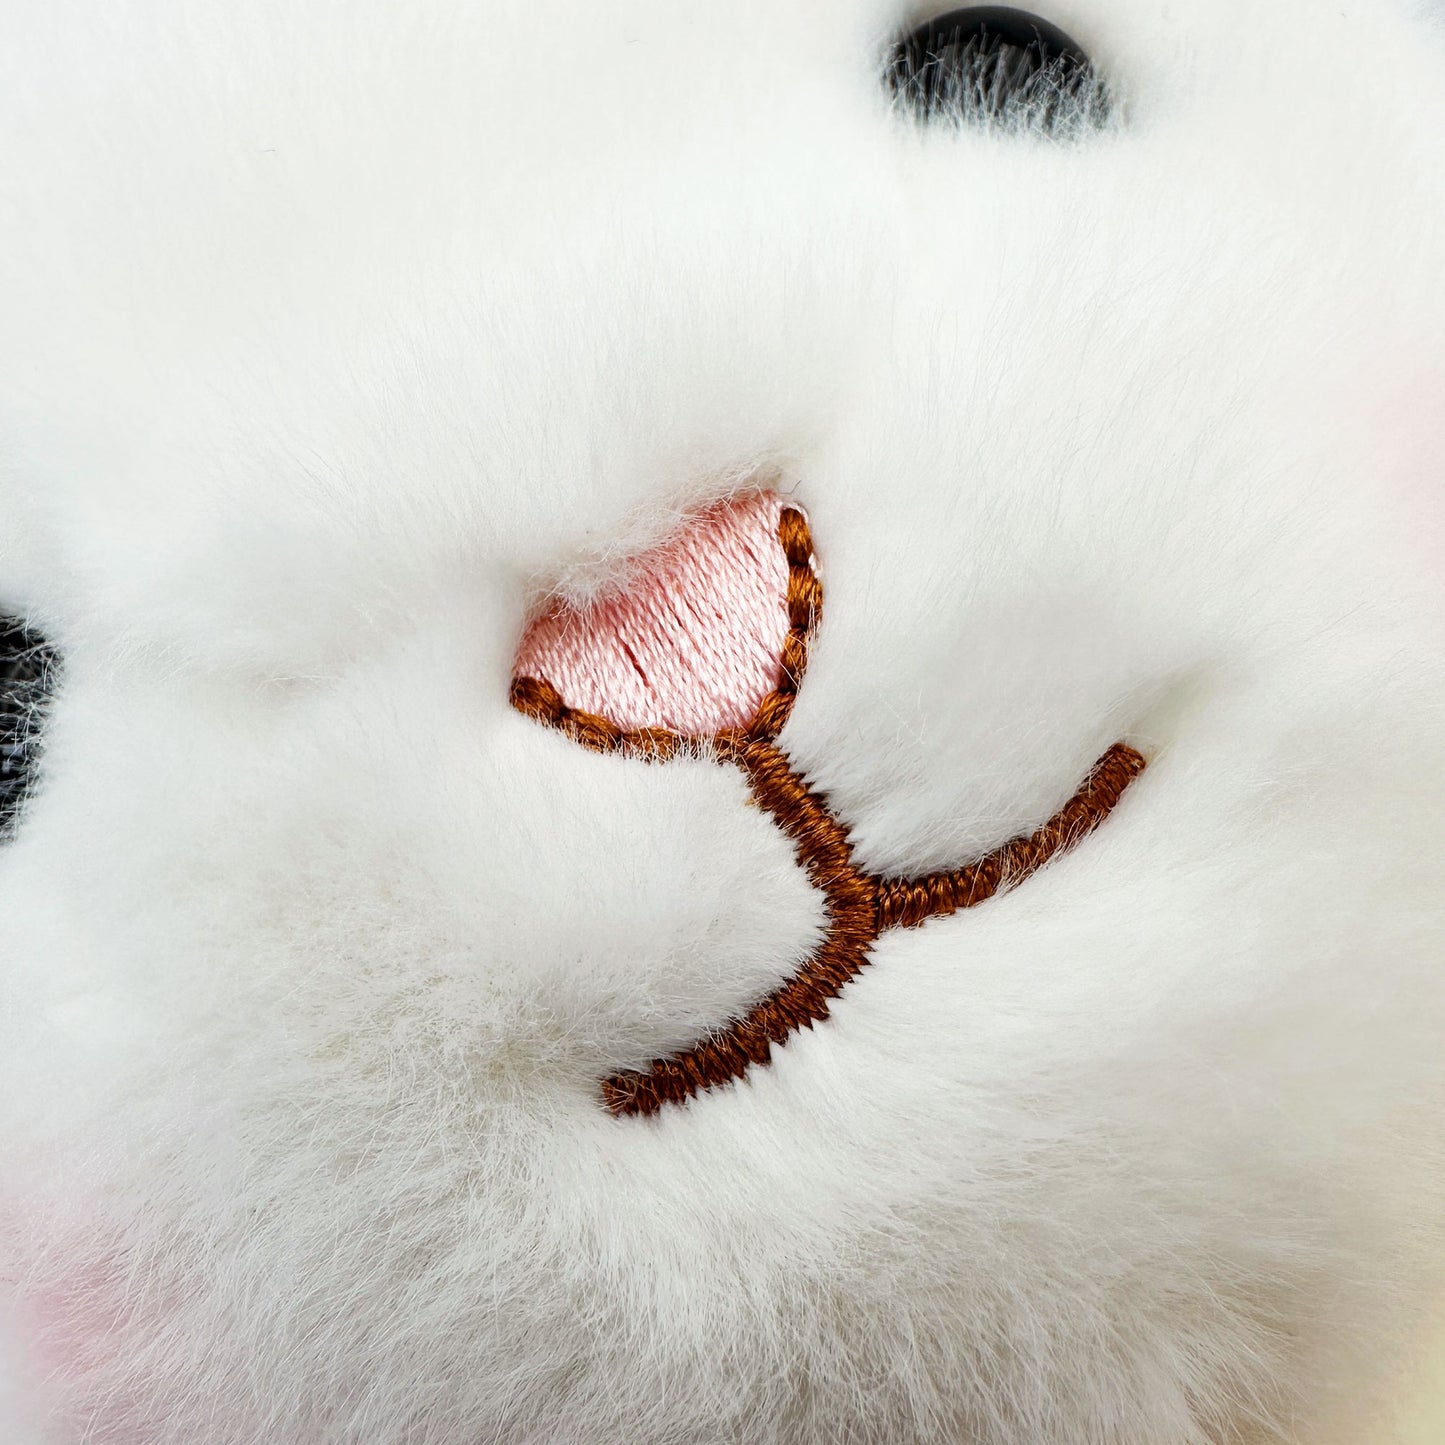 the face of a cute bunny stuffed animal